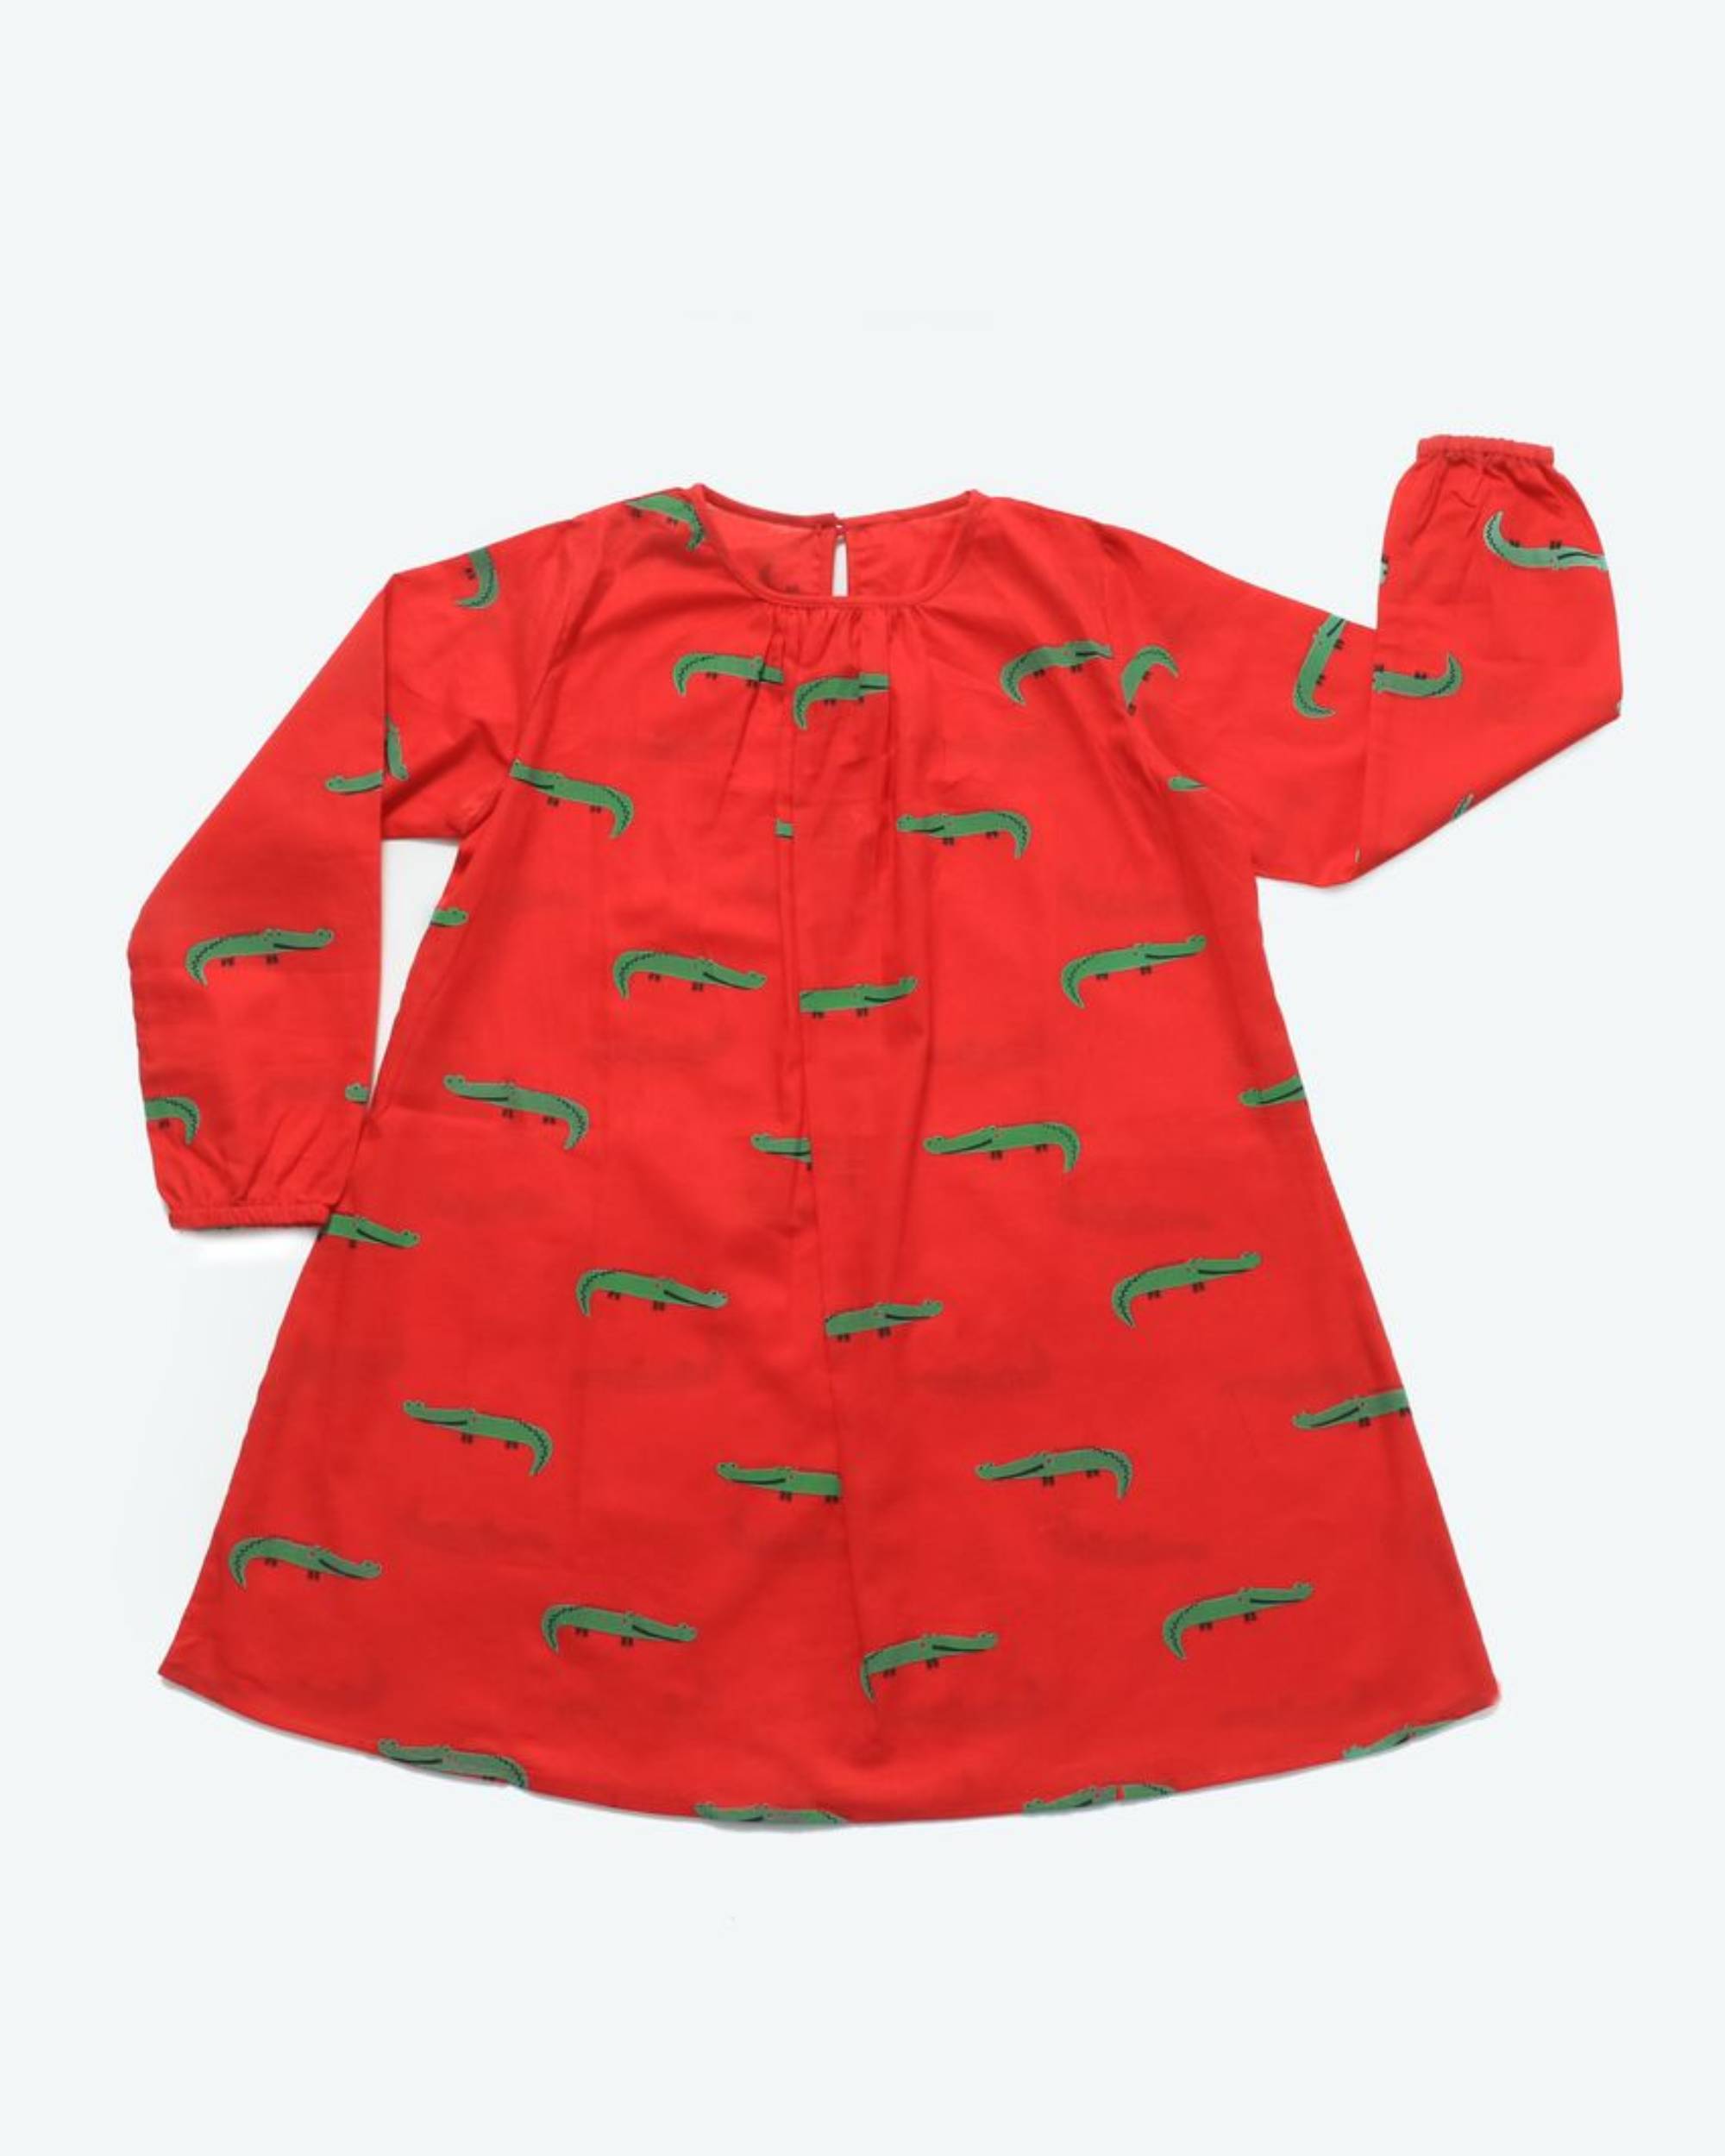 Red and green crocodile printed night dress